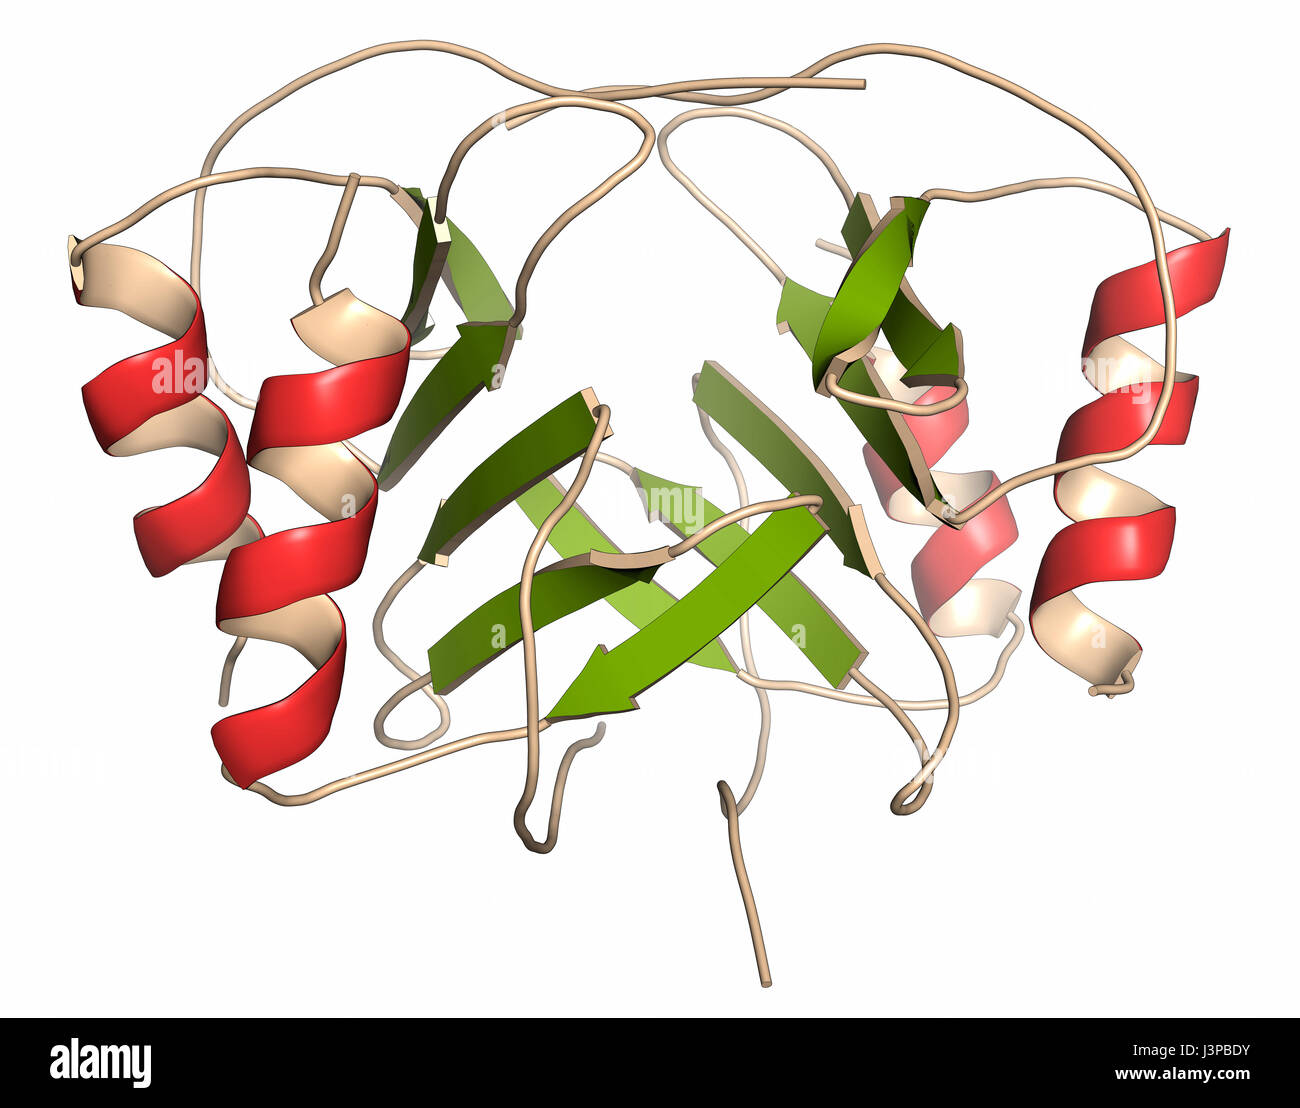 Proteinas cartoon fotografías e imágenes de alta resolución - Alamy